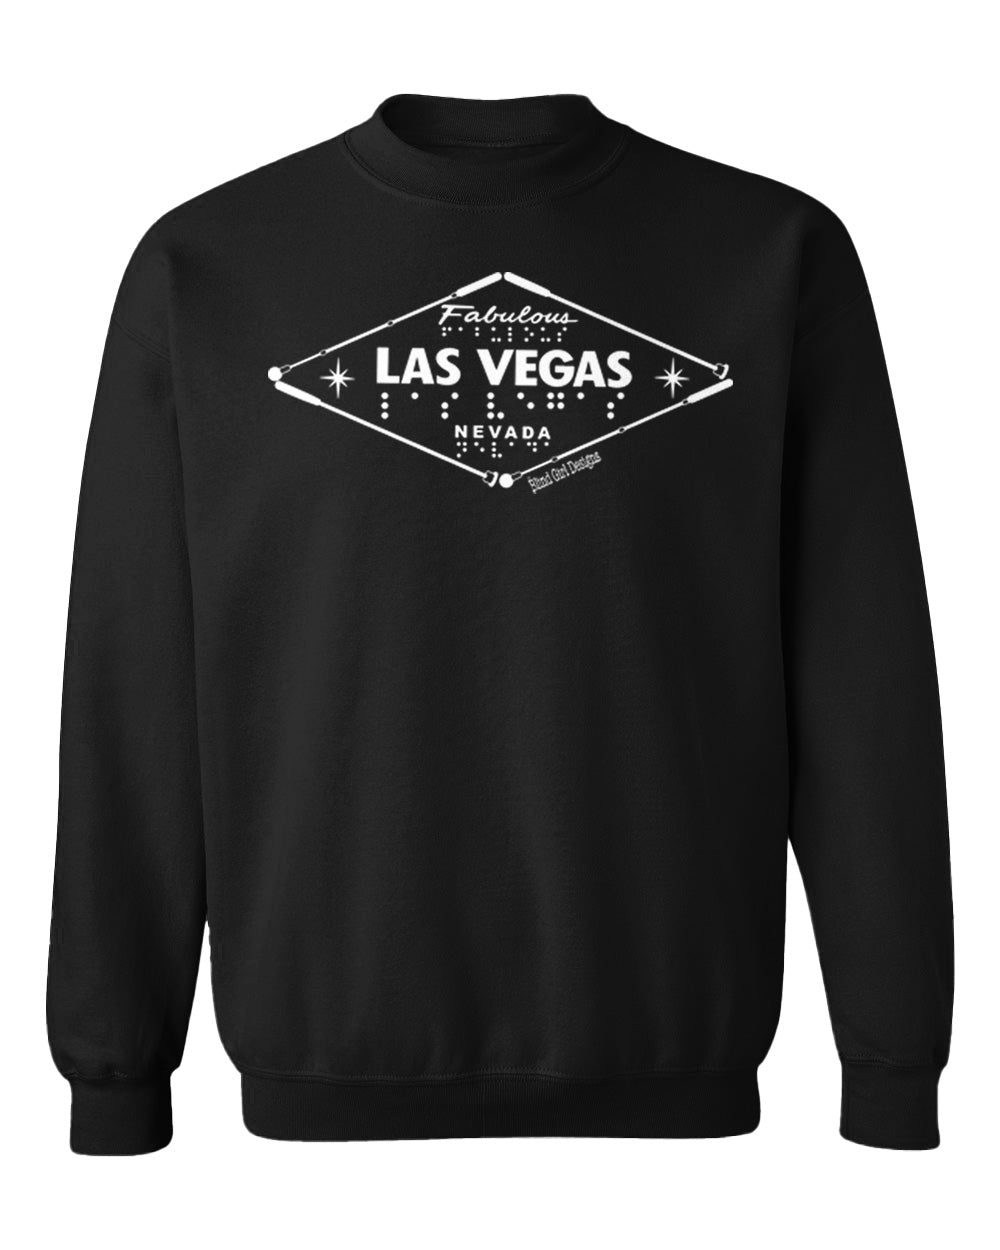 Fabulous Las Vegas White Cane Crew Sweatshirt Black